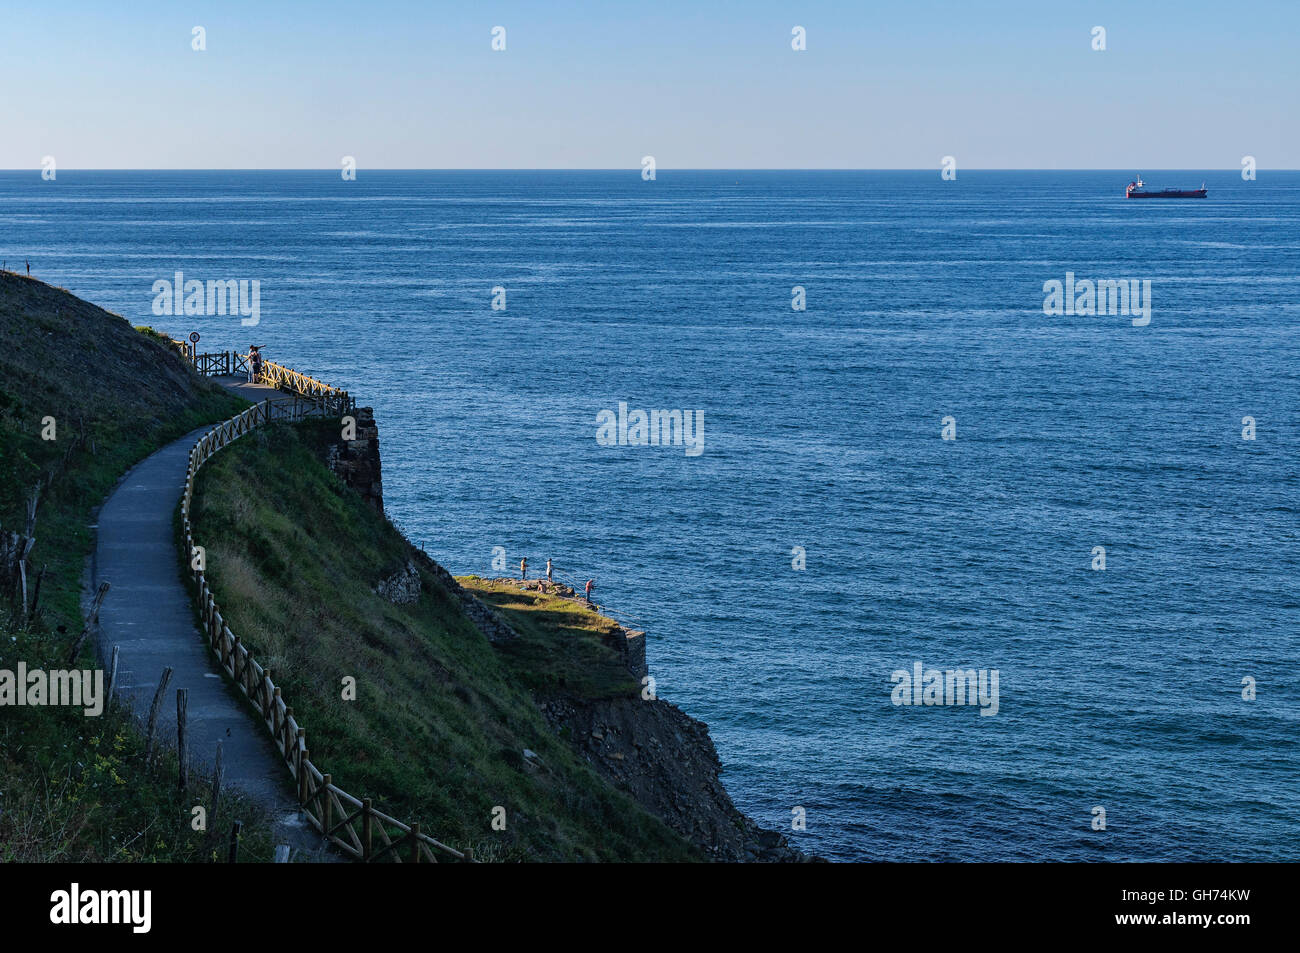 Itsaslur walk to the edge of the Cantabrian Sea, coast of Bilbao, northern Spain Stock Photo